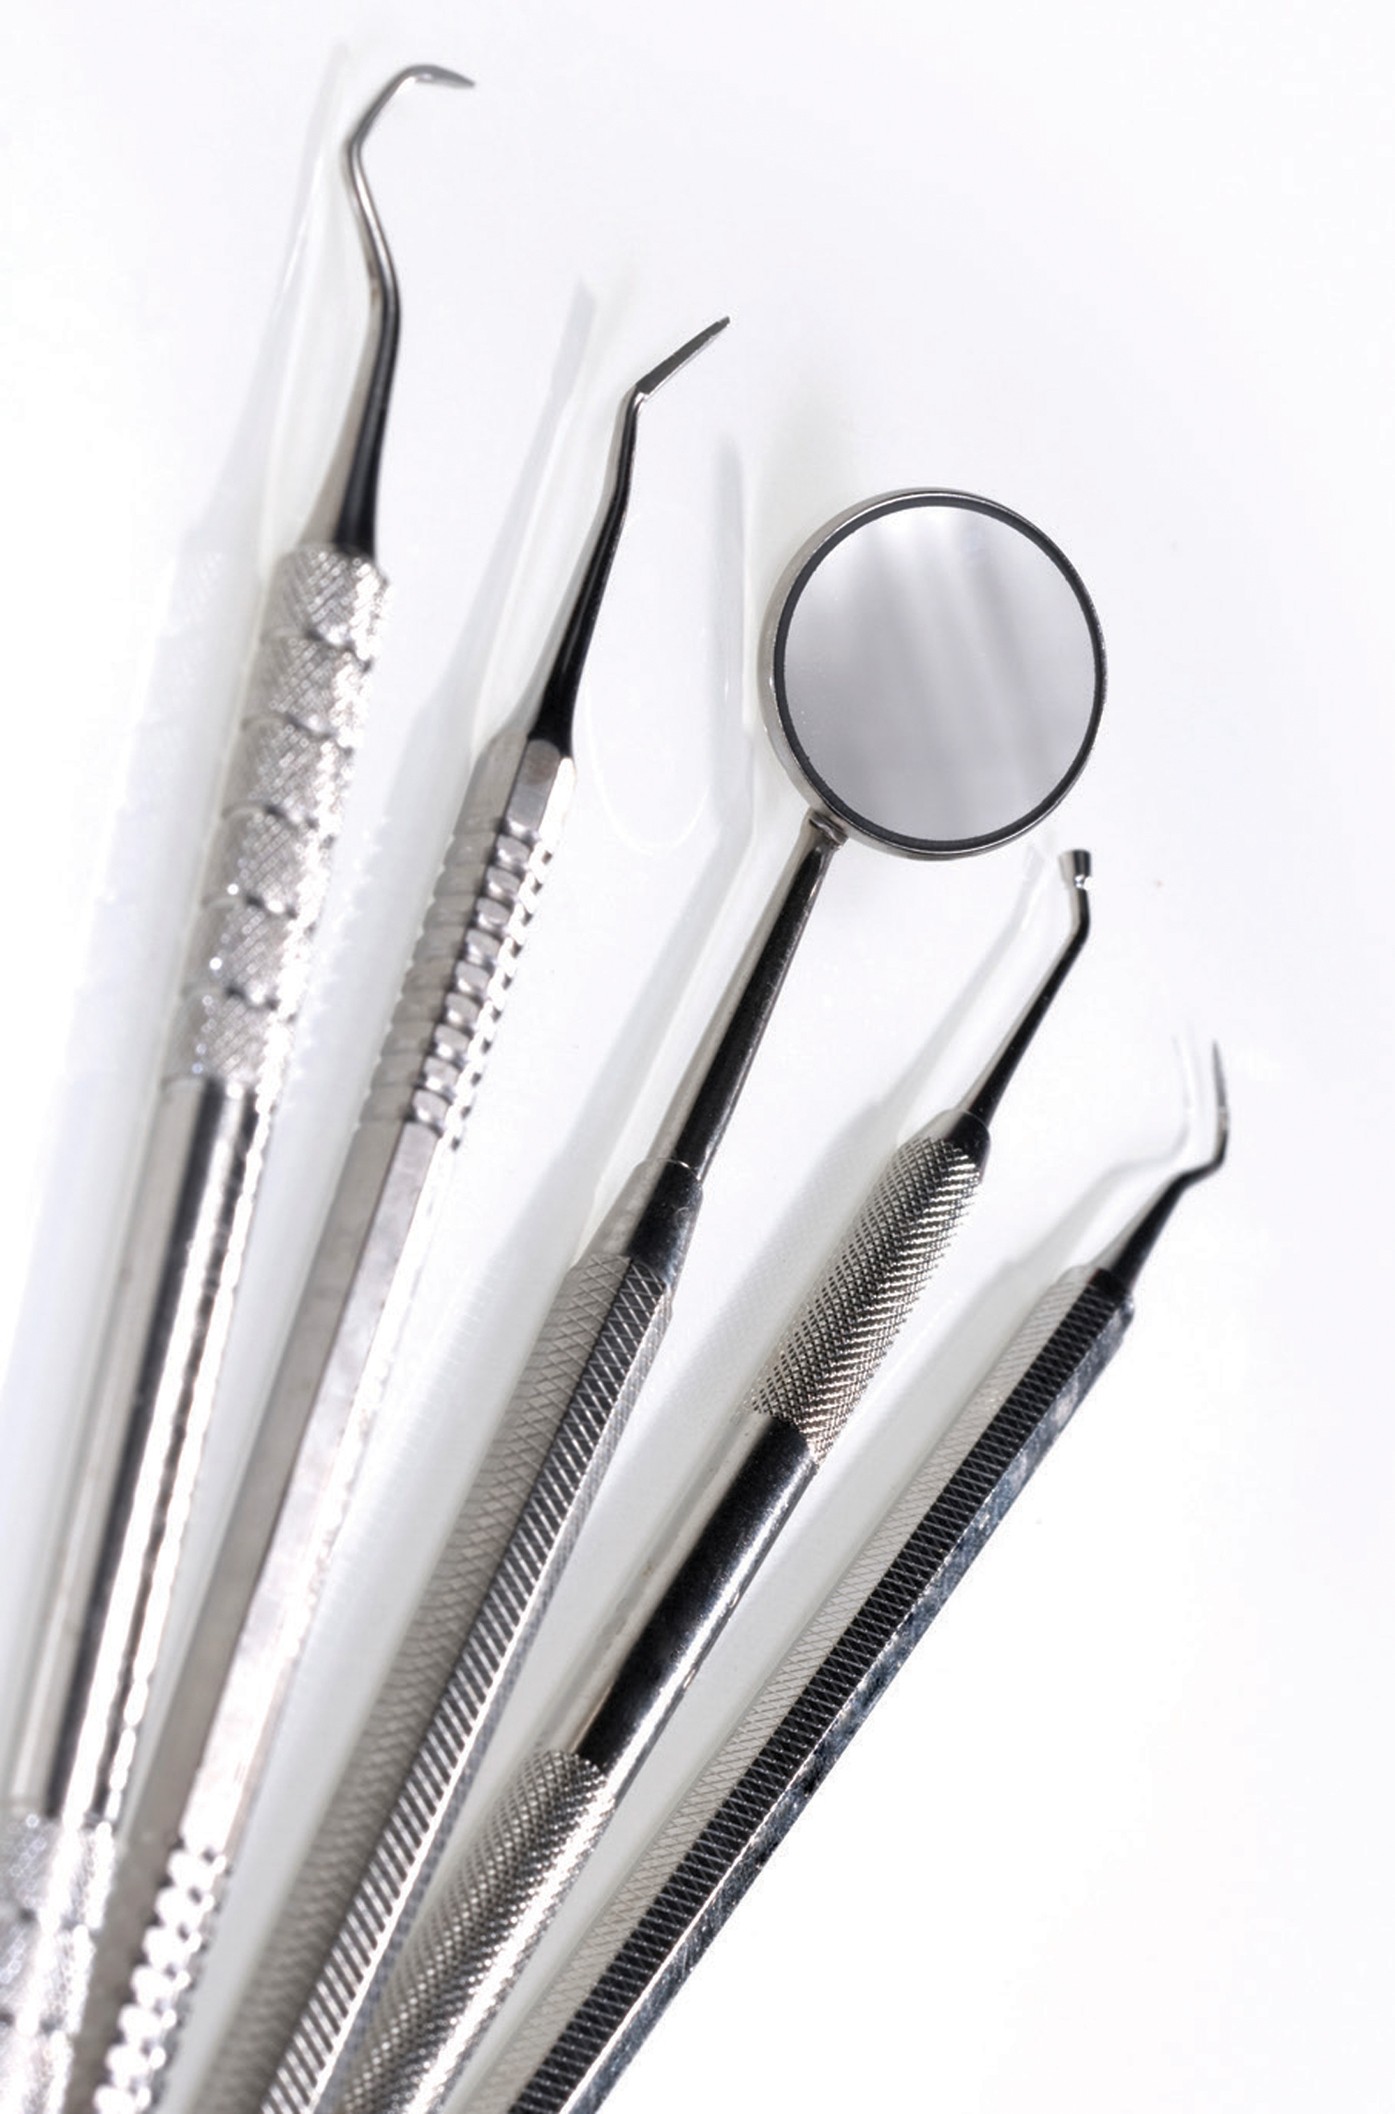 The cutting edge of dental instruments | BDJ Team